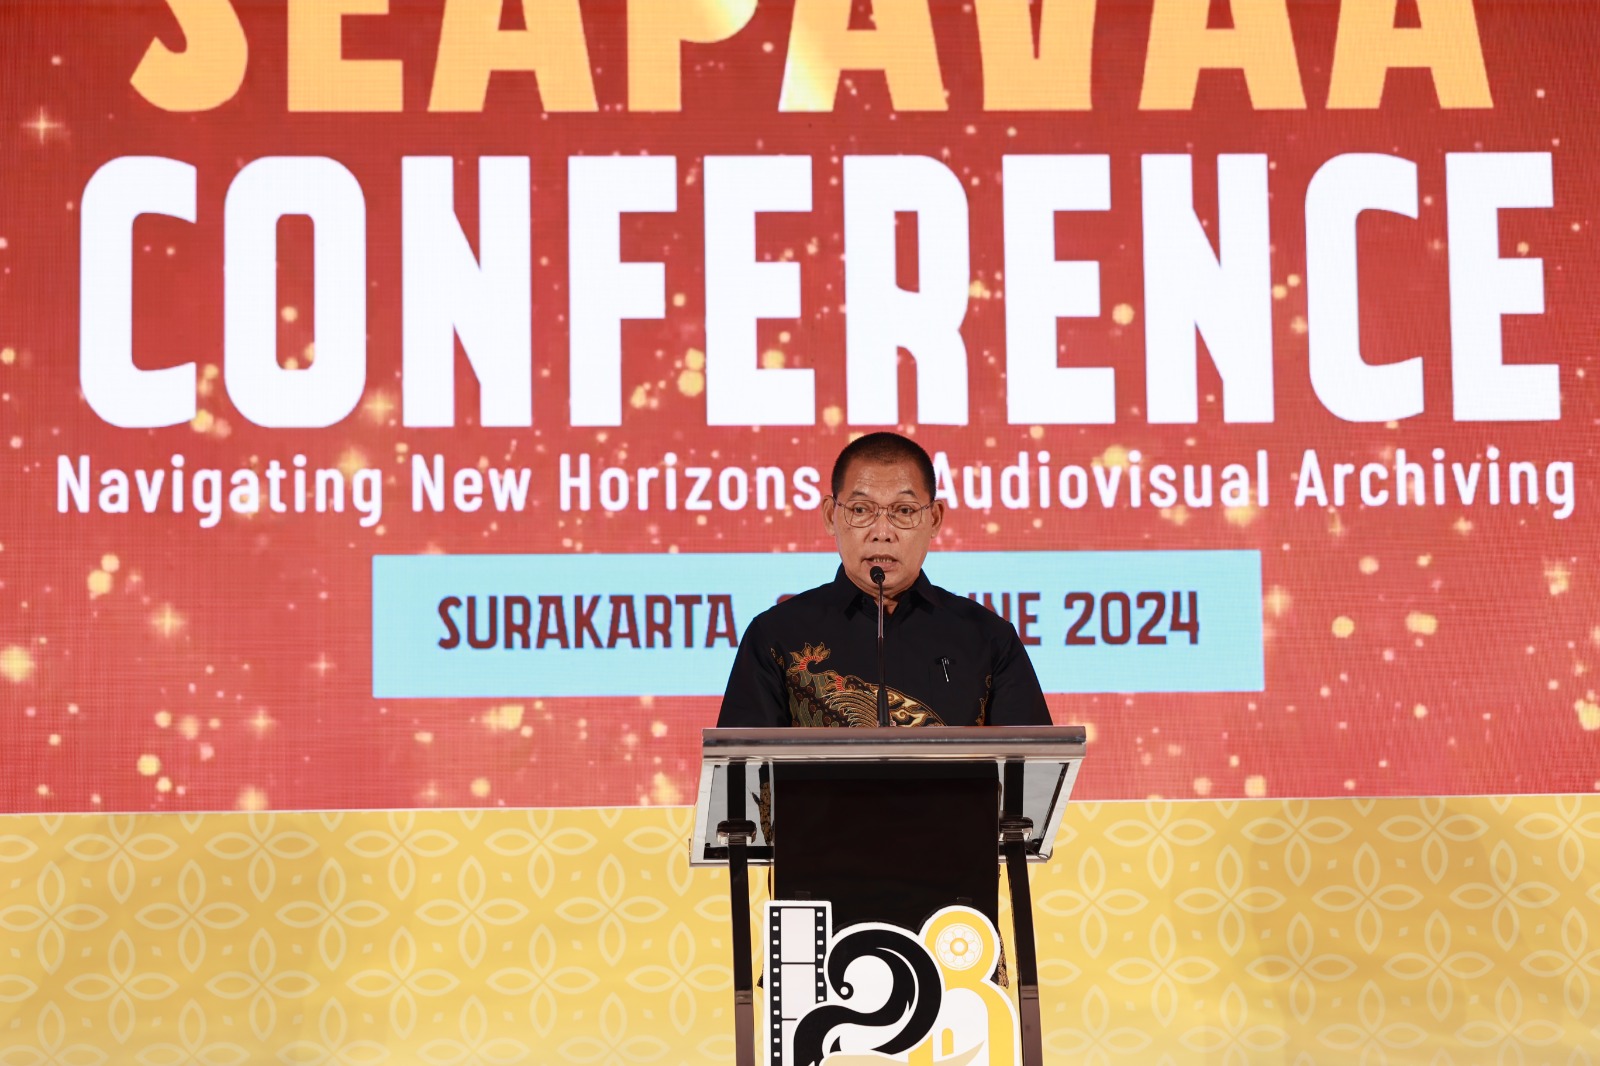 Jadi Tuan Rumah Konferensi SEAPAVAA, Solo Komitmen Lestarikan dan Promosikan Warisan Budaya Audiovisual